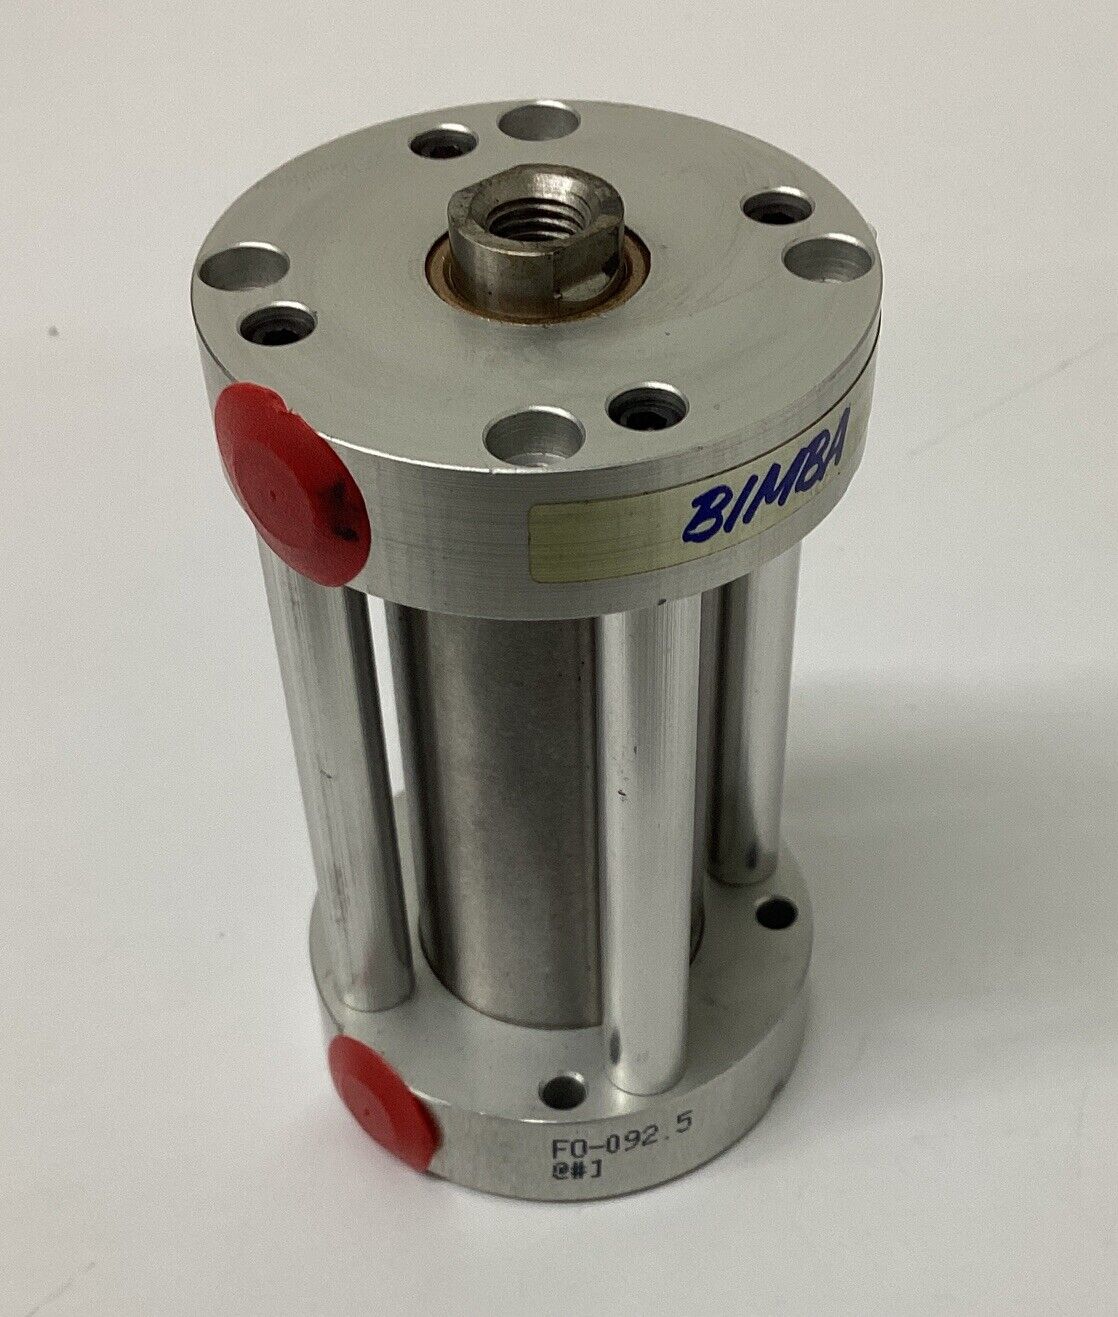 Bimba FO-092.5 Pneumatic Cylinder (BL271) - 0